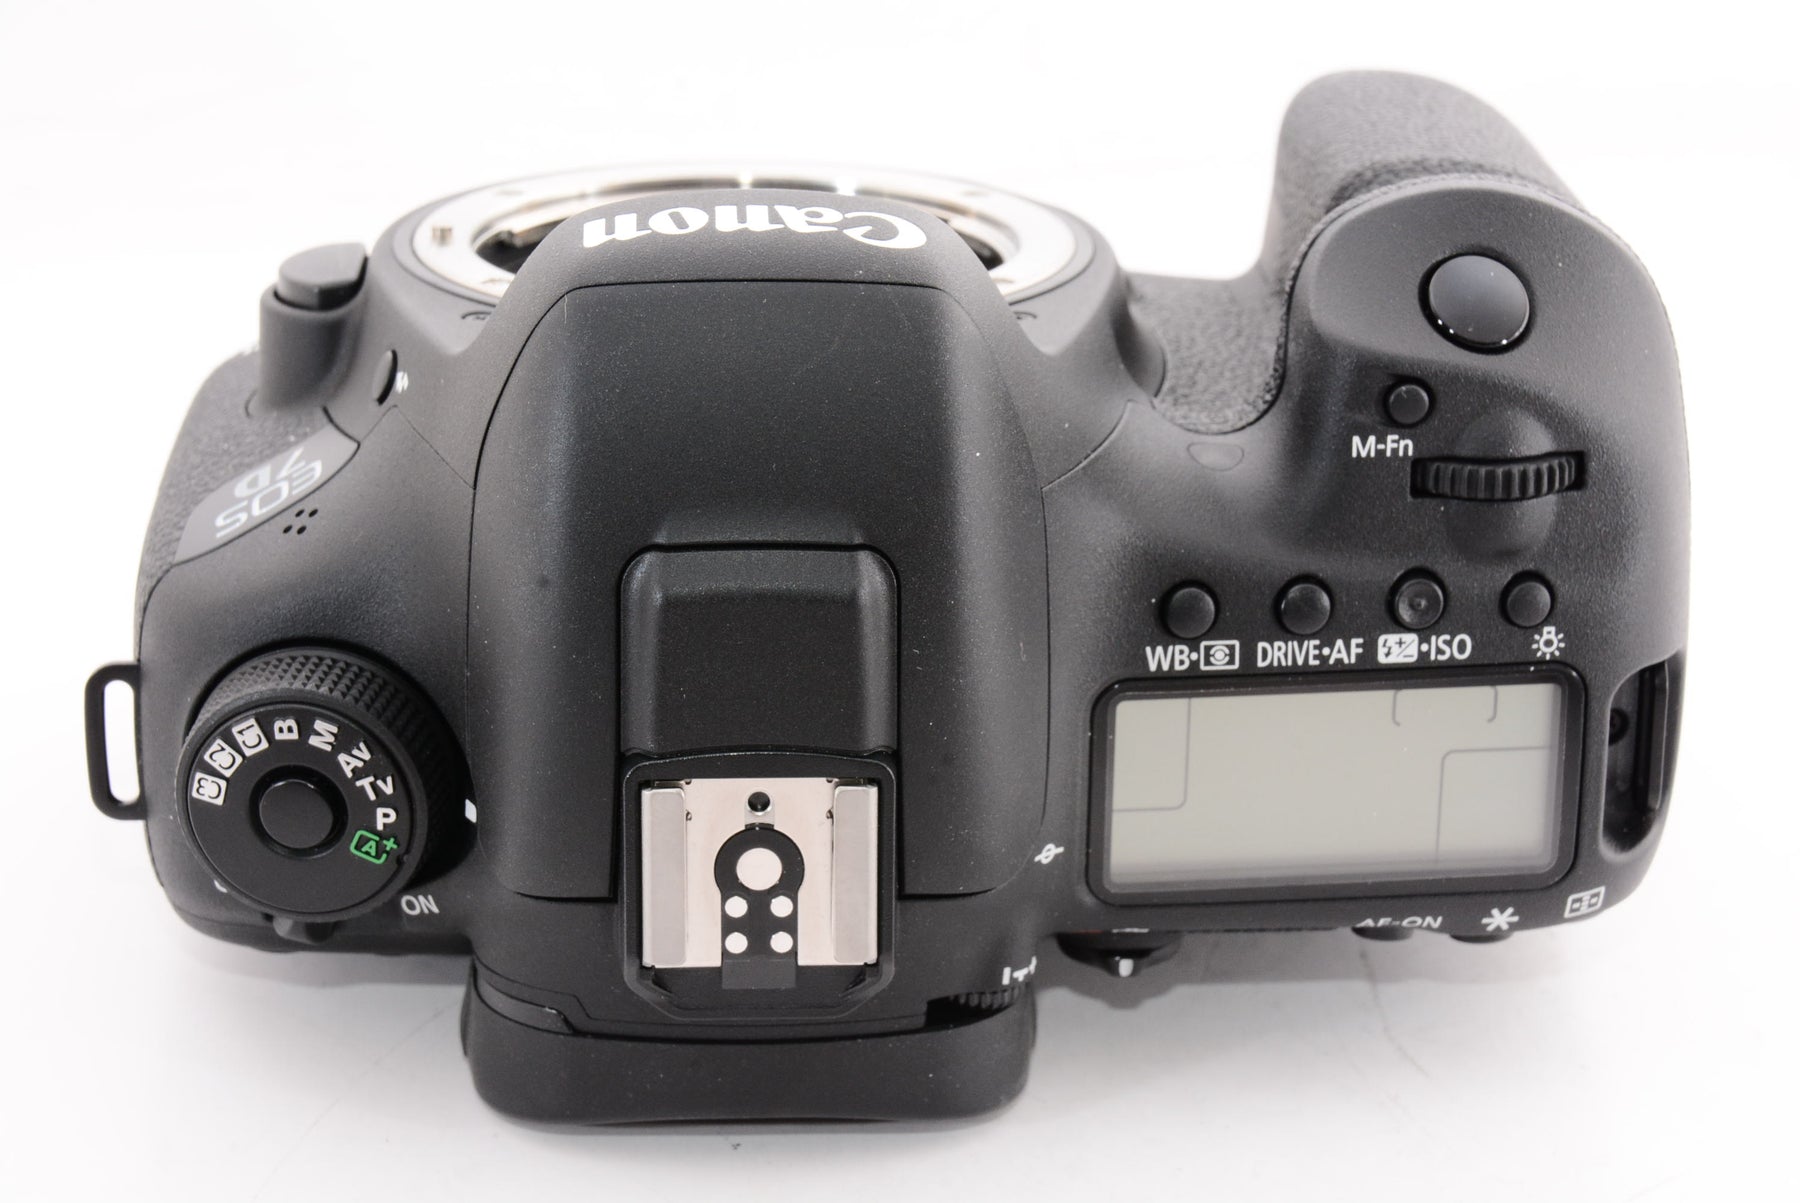 Canon デジタル一眼レフカメラ EOS 7D Mark IIボディ EOS7DMK2 - 5